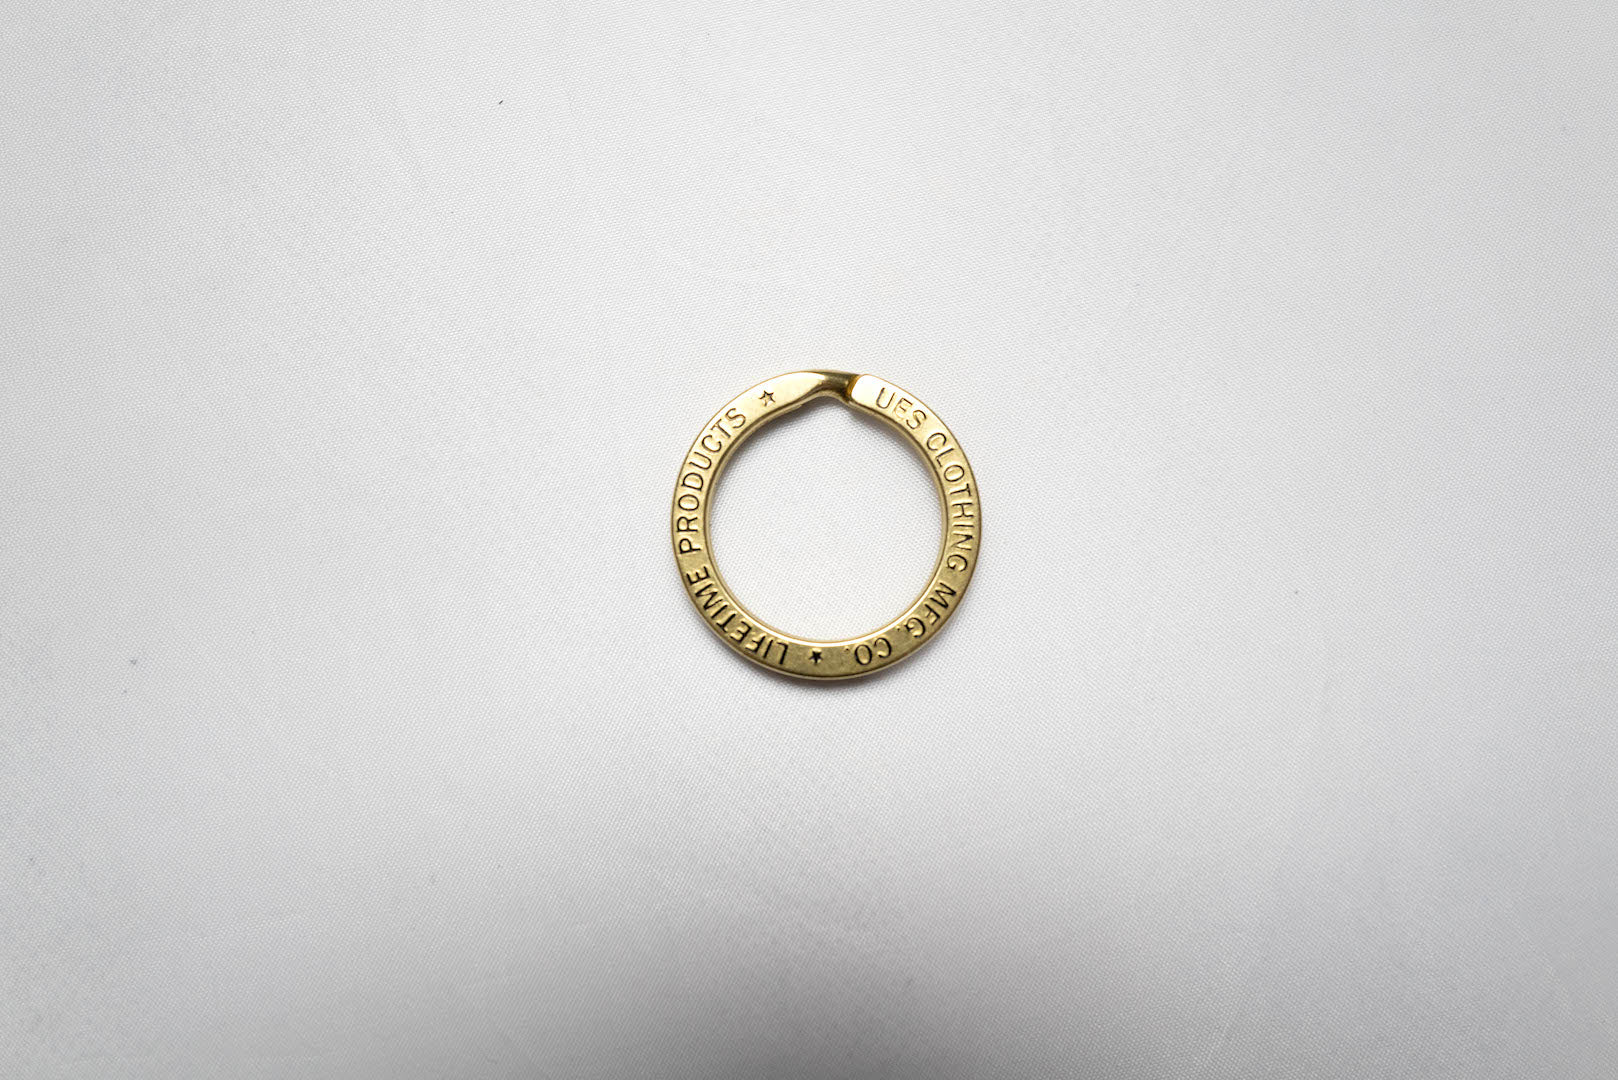 UES "Lifetime" Copper Key Ring